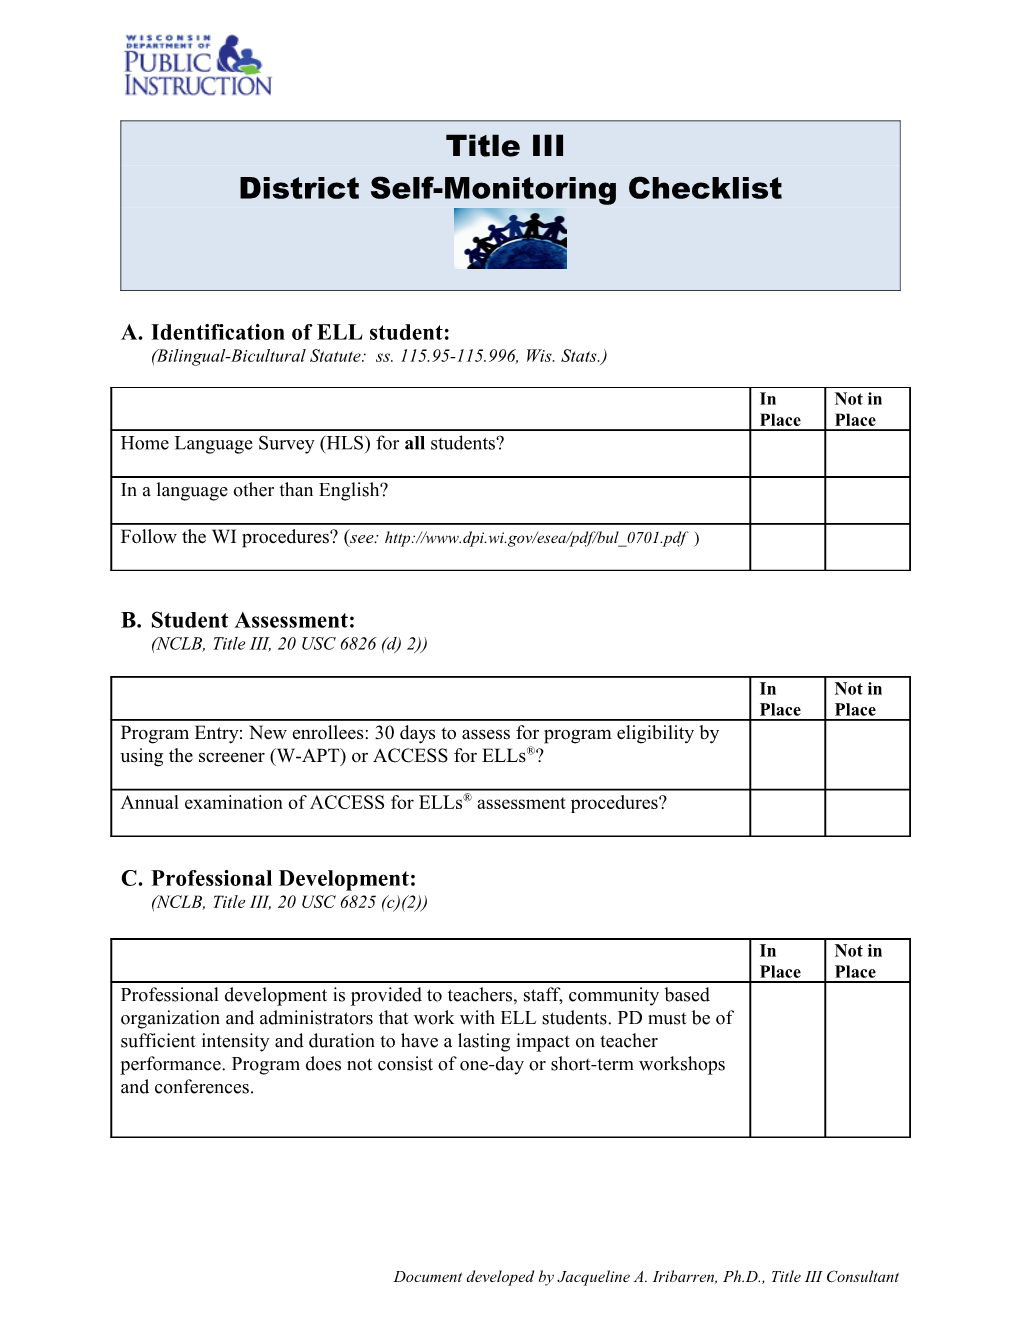 District Self-Monitoring Checklist